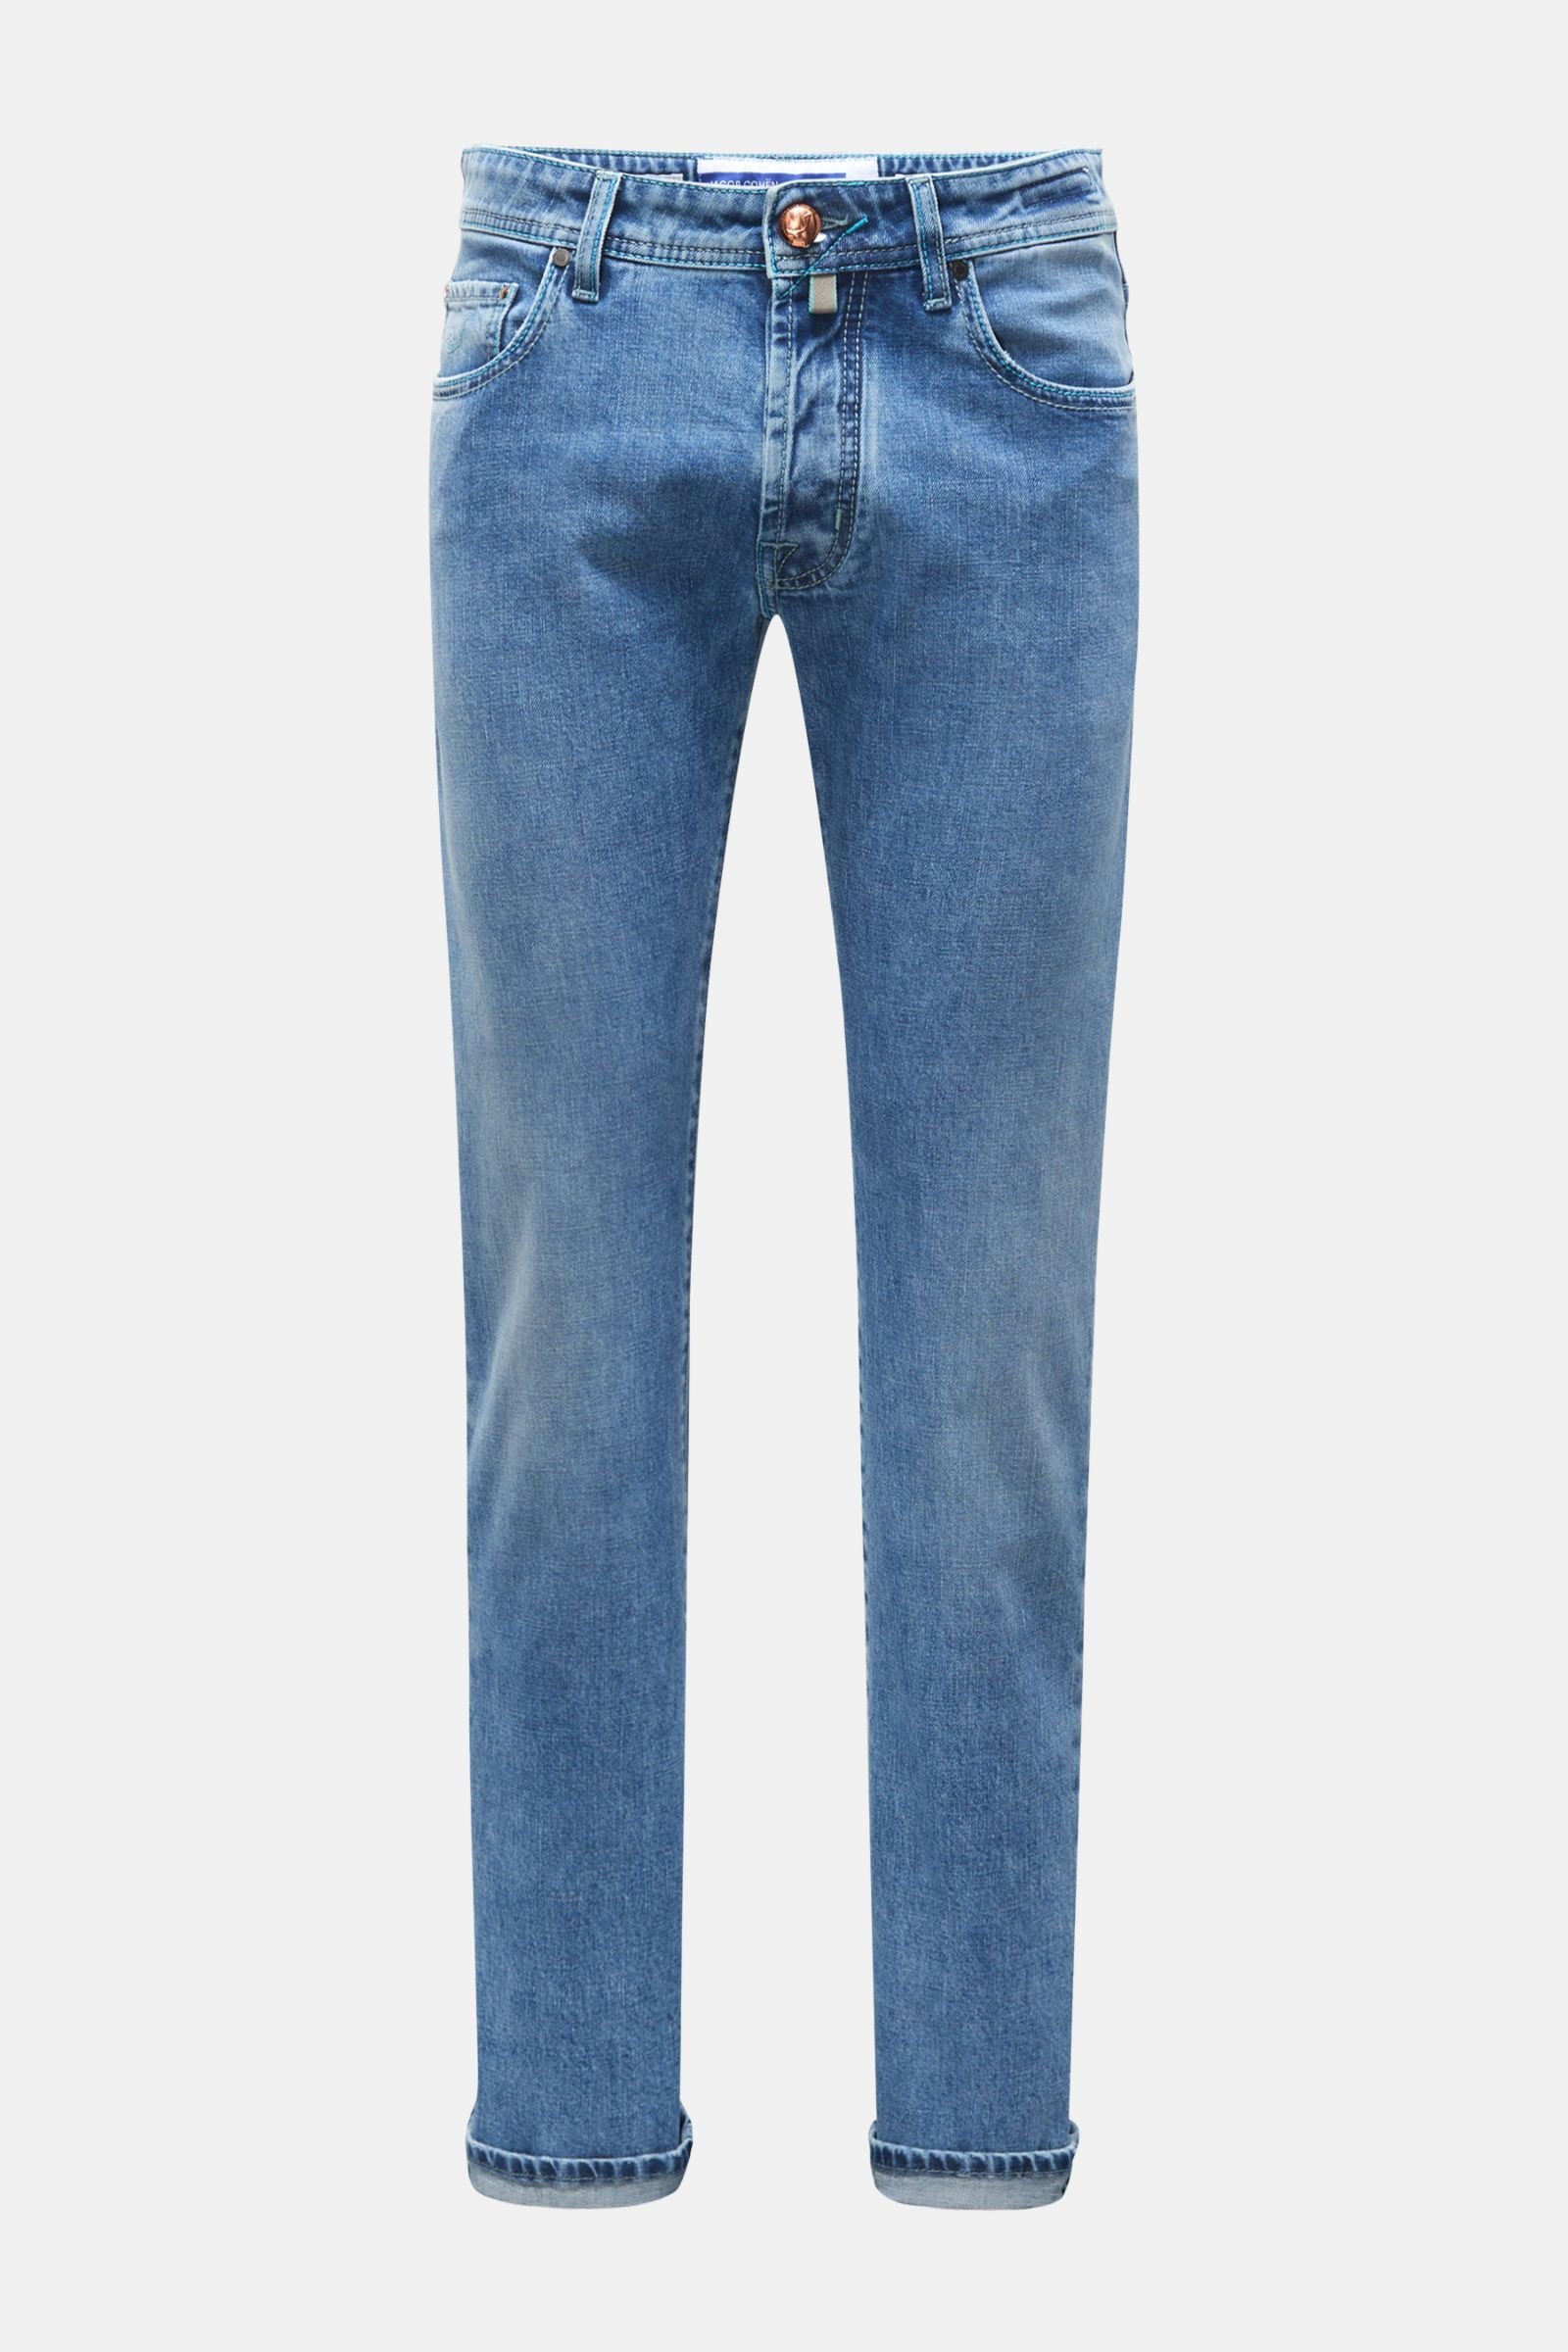 'Bard' jeans grey-blue (previously J688)